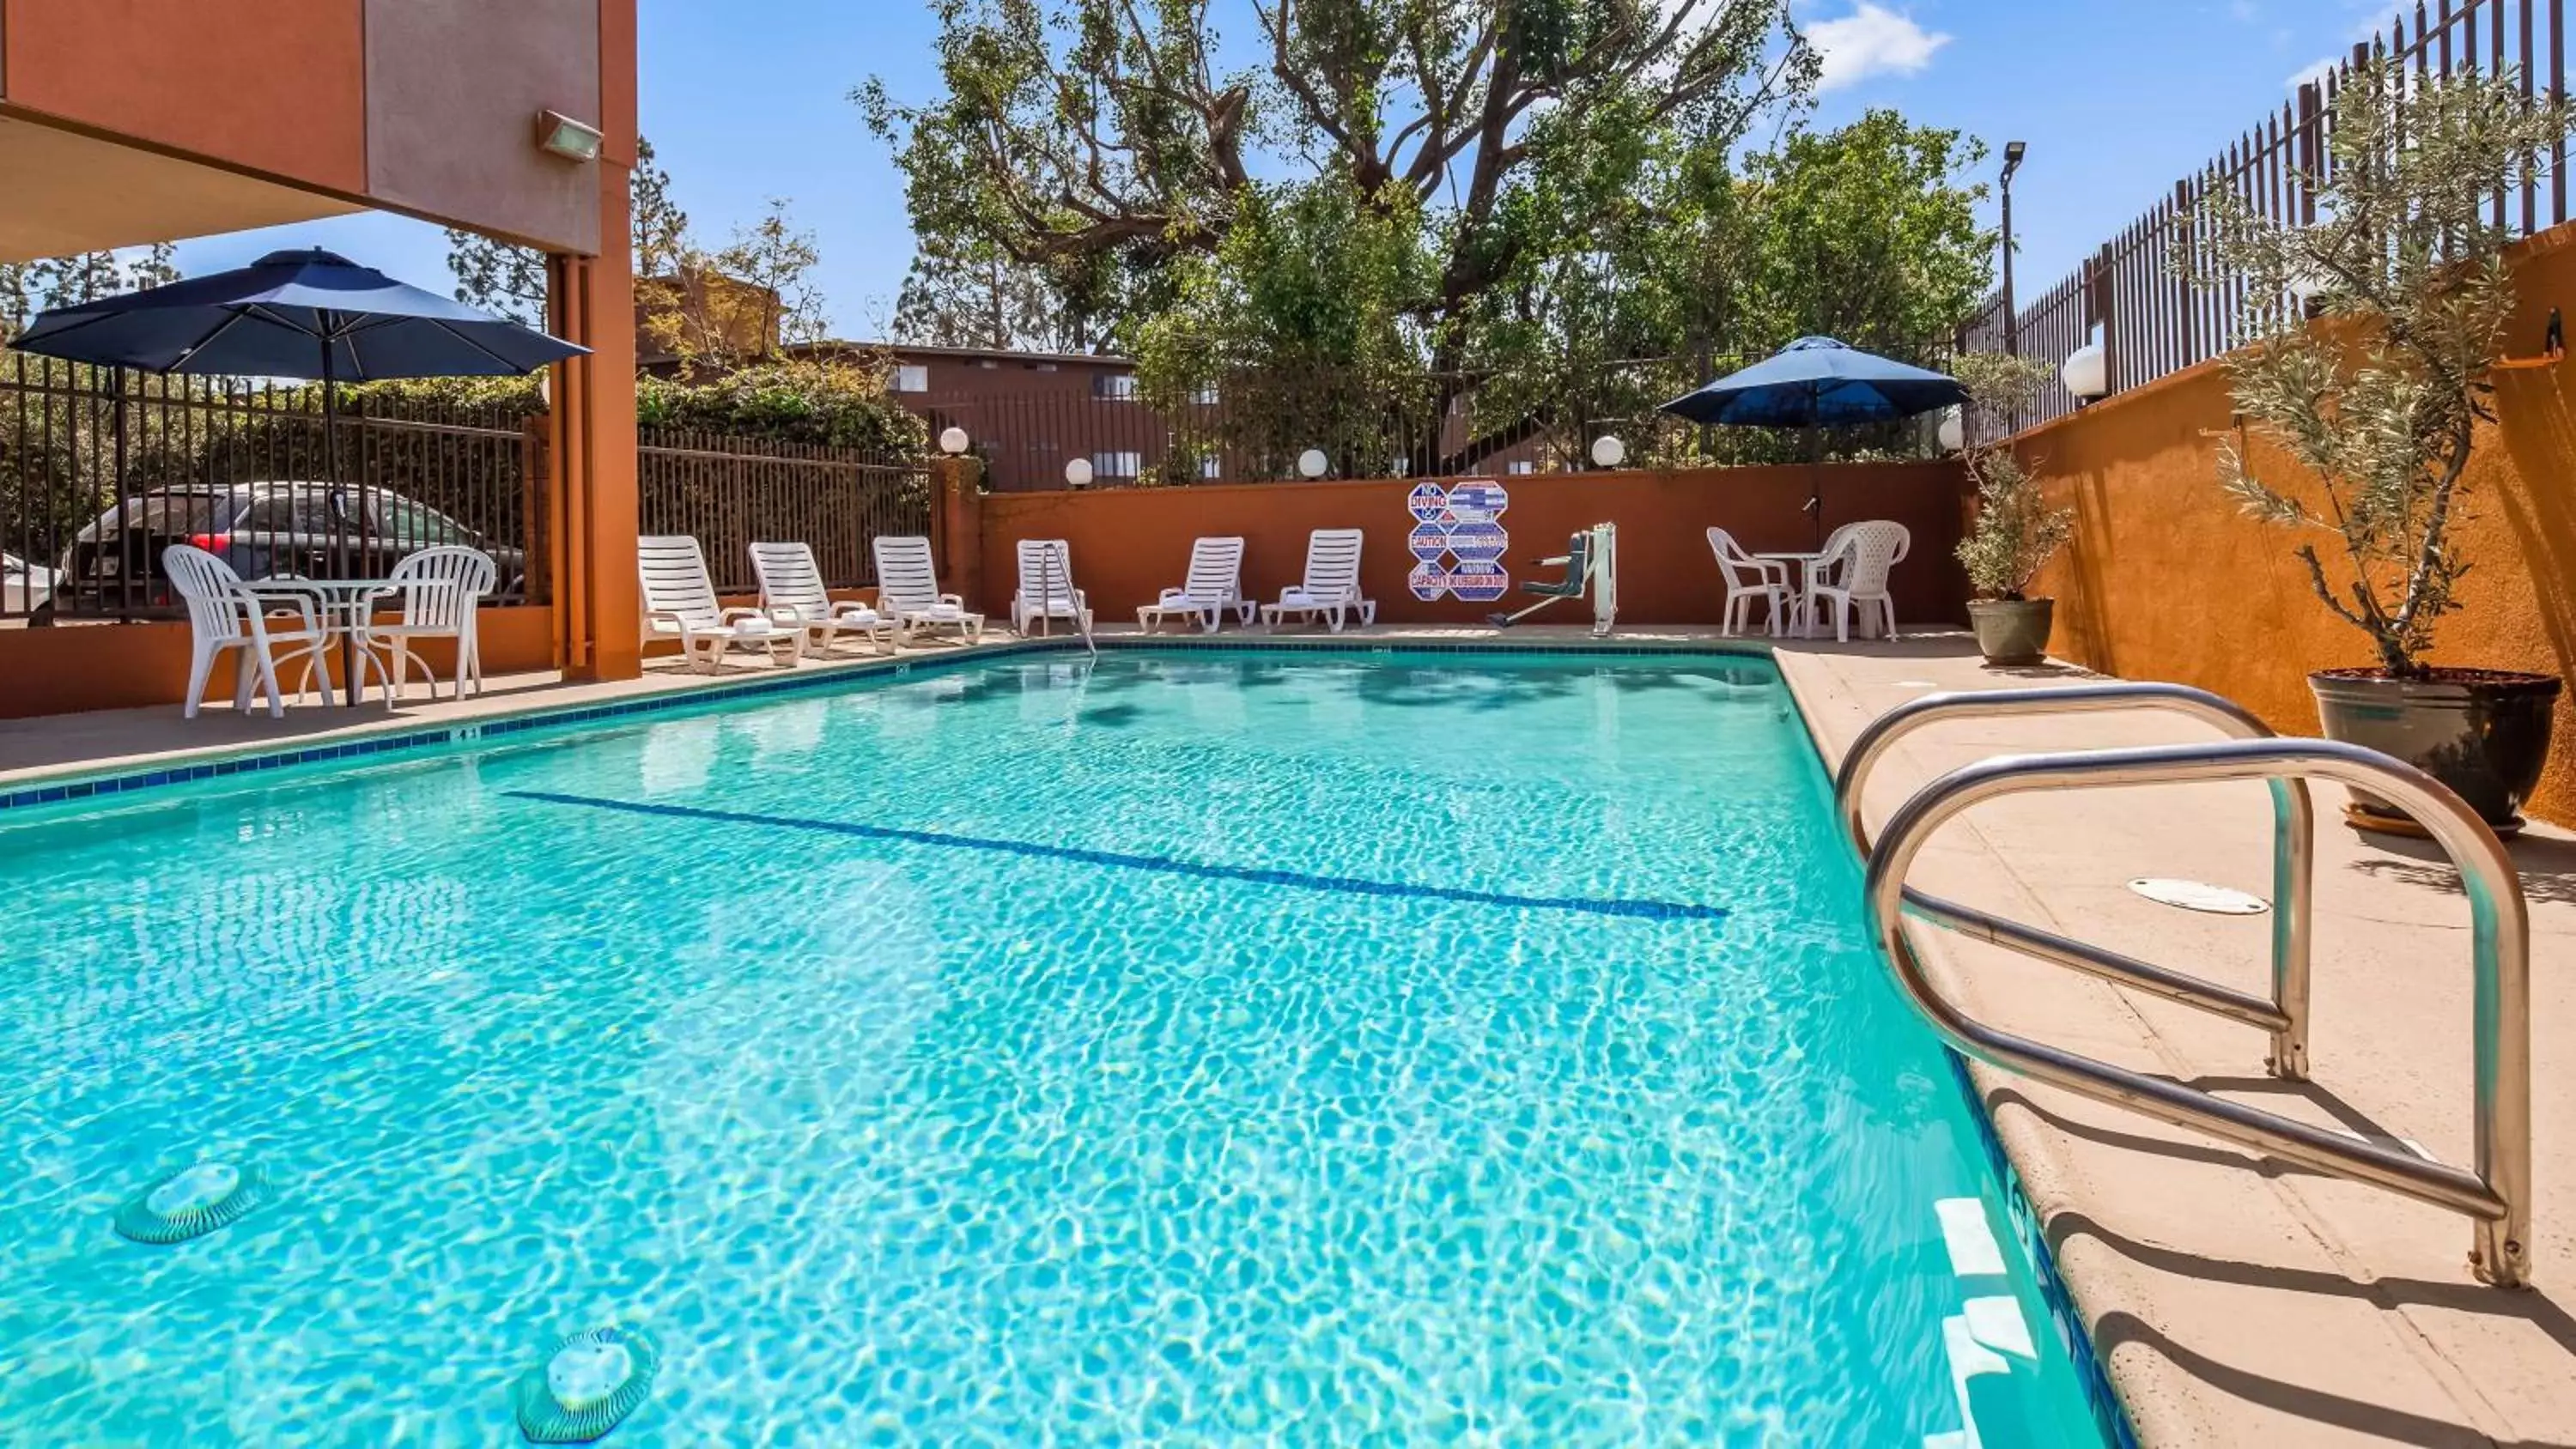 On site, Swimming Pool in Best Western Los Angeles Worldport Hotel